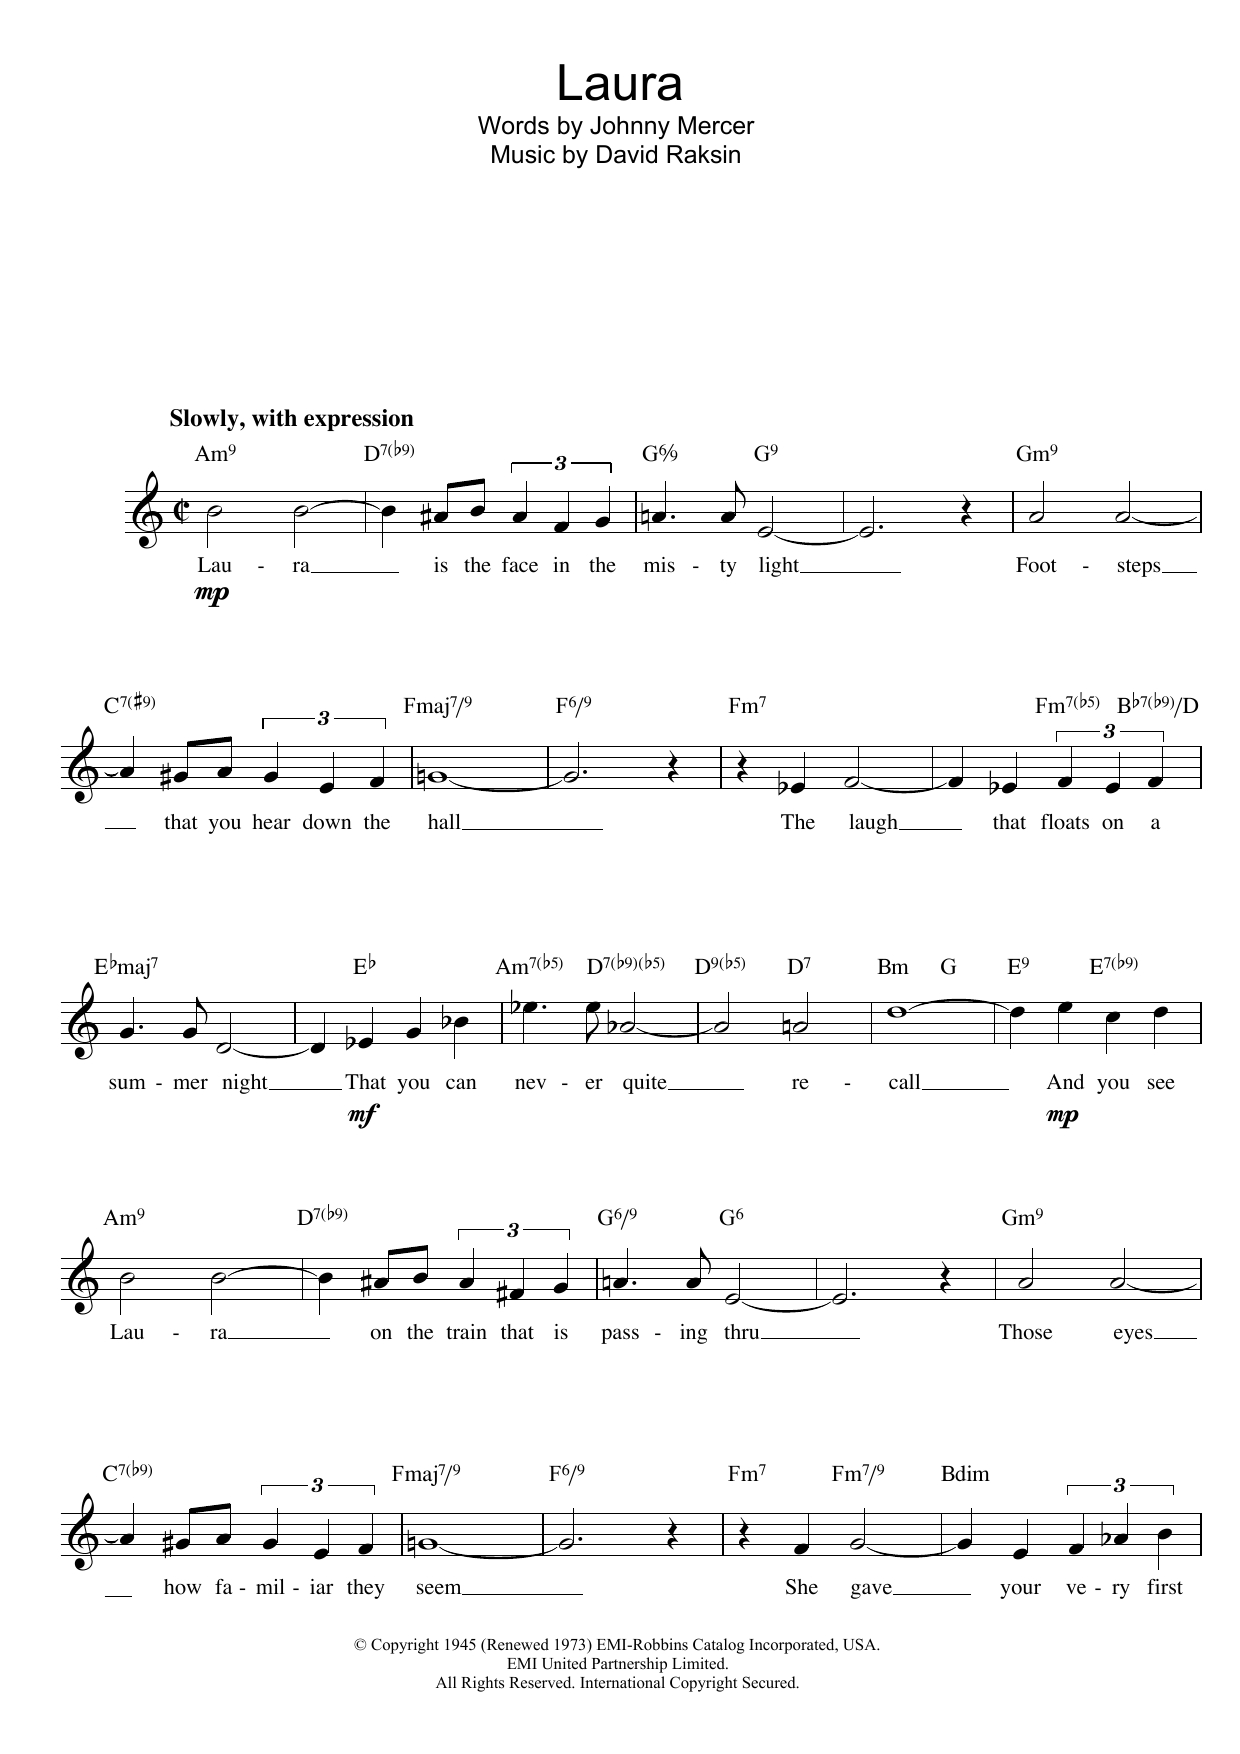 Download David Raksin Laura Sheet Music and learn how to play Organ PDF digital score in minutes